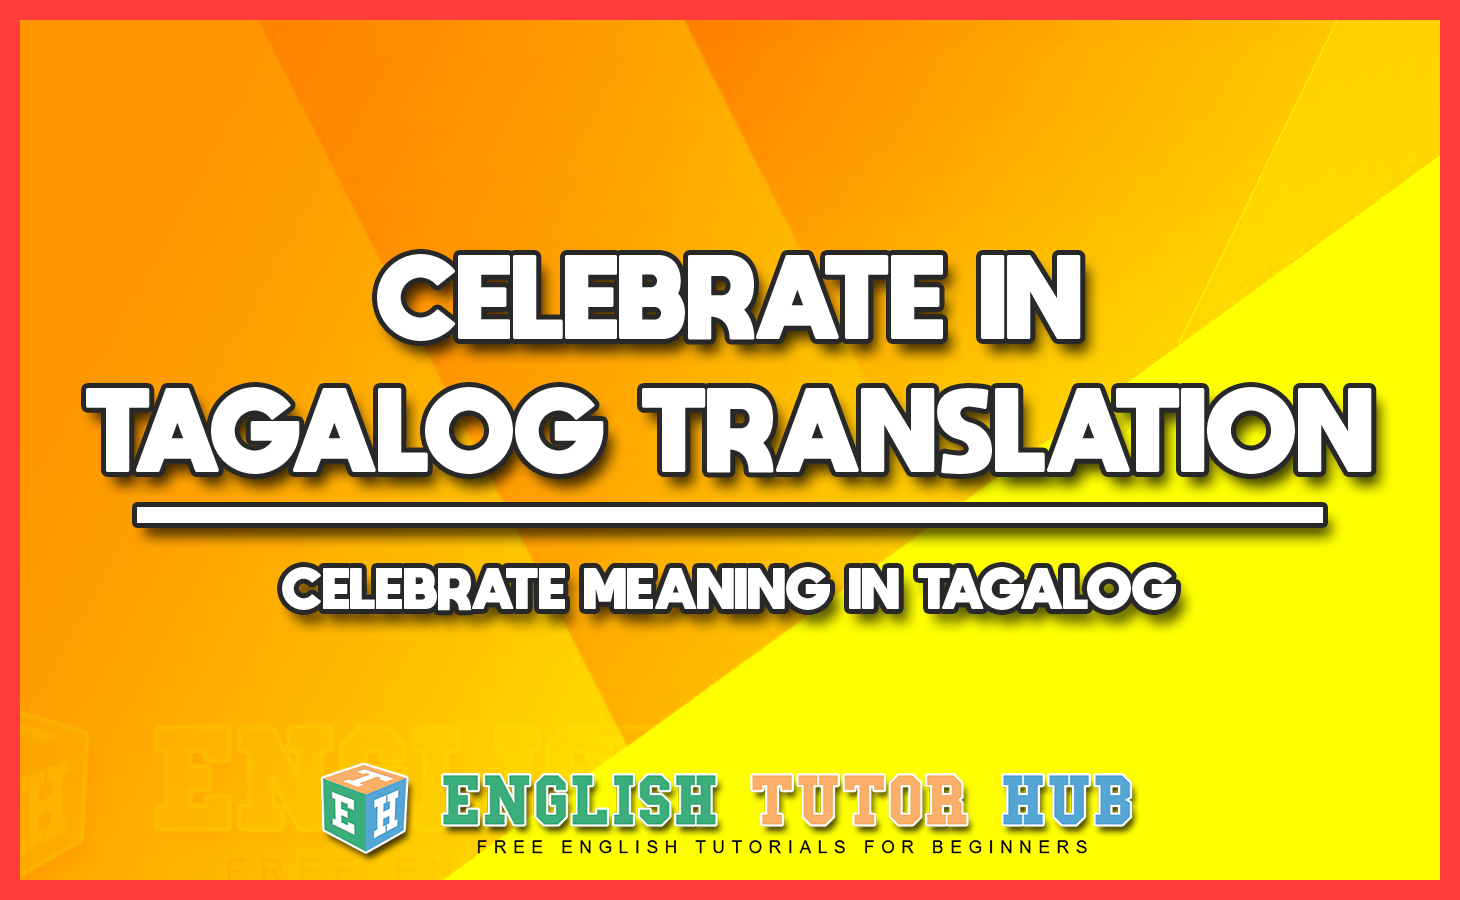 CELEBRATE IN TAGALOG TRANSLATION - CELEBRATE MEANING IN TAGALOG